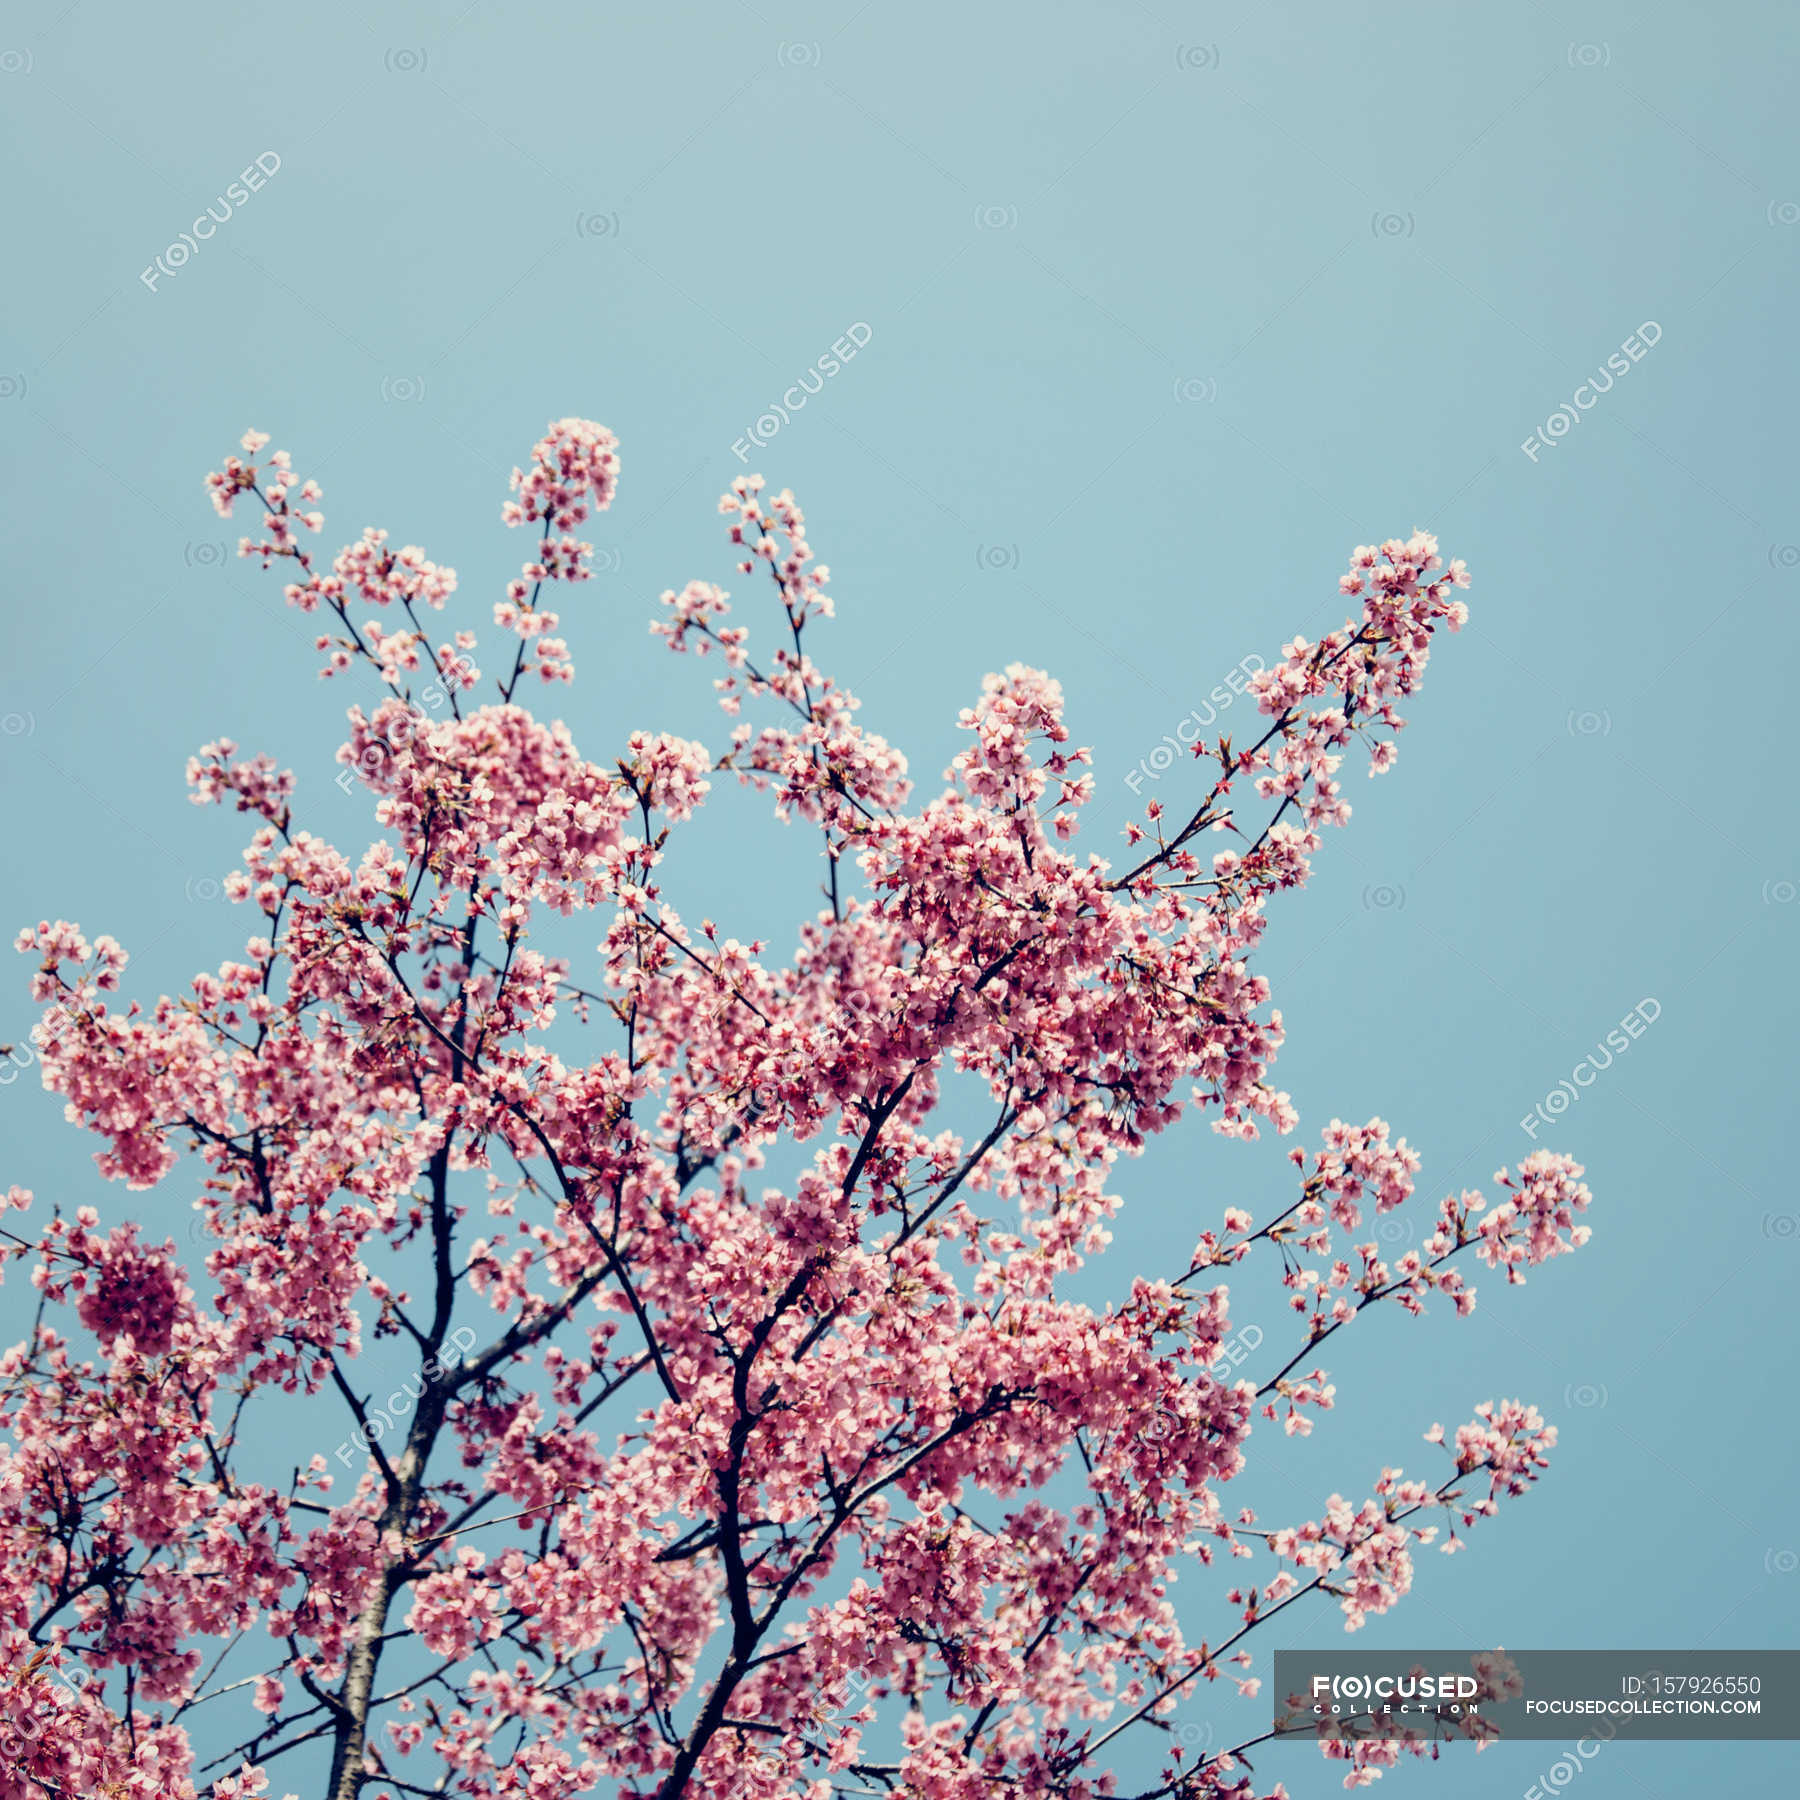 Blossoming cherry tree — Stock Photo | #157926550